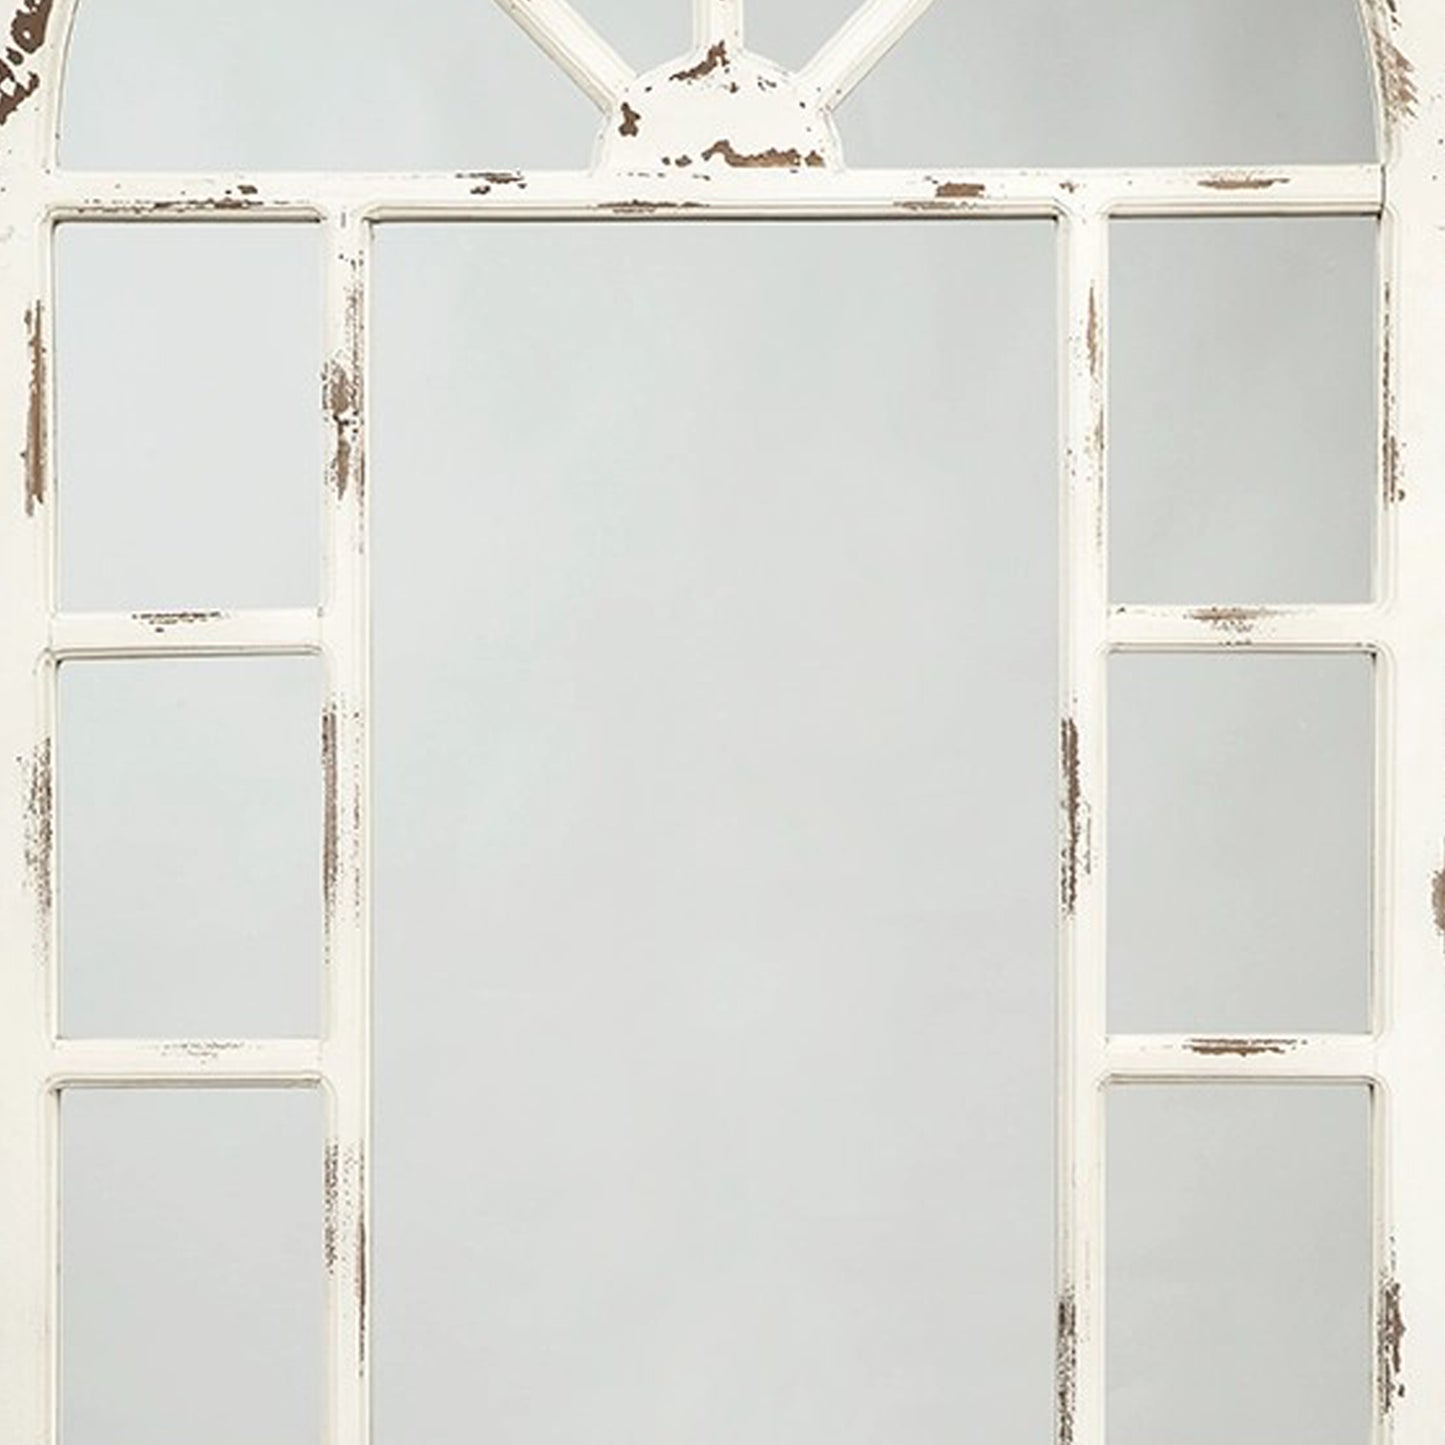 Wooden Window Pane Design Accent Mirror, Antique White By Casagear Home